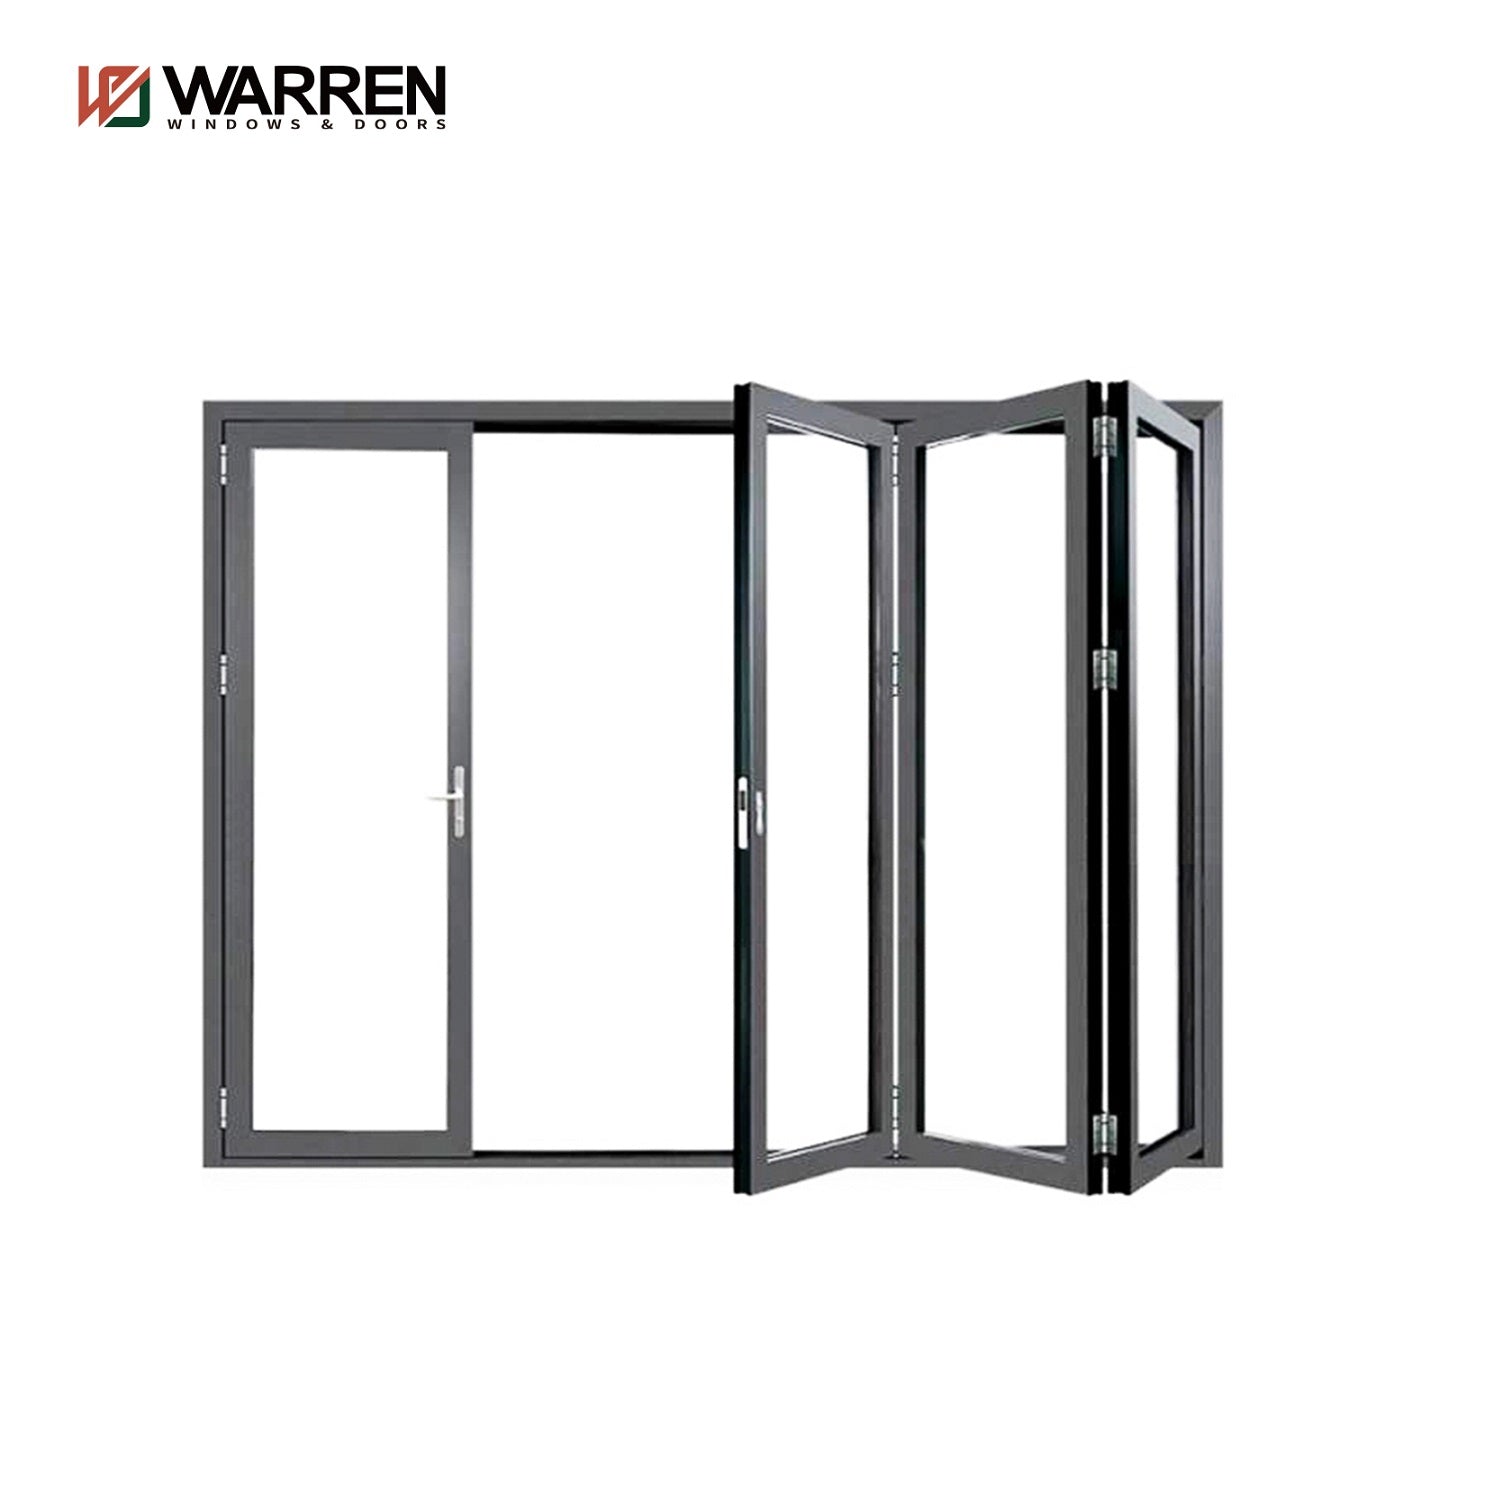 Warren 12foot Bi-Fold Door Aluminum Bi-Fold Door With Screen Interior Bi-Fold Doors